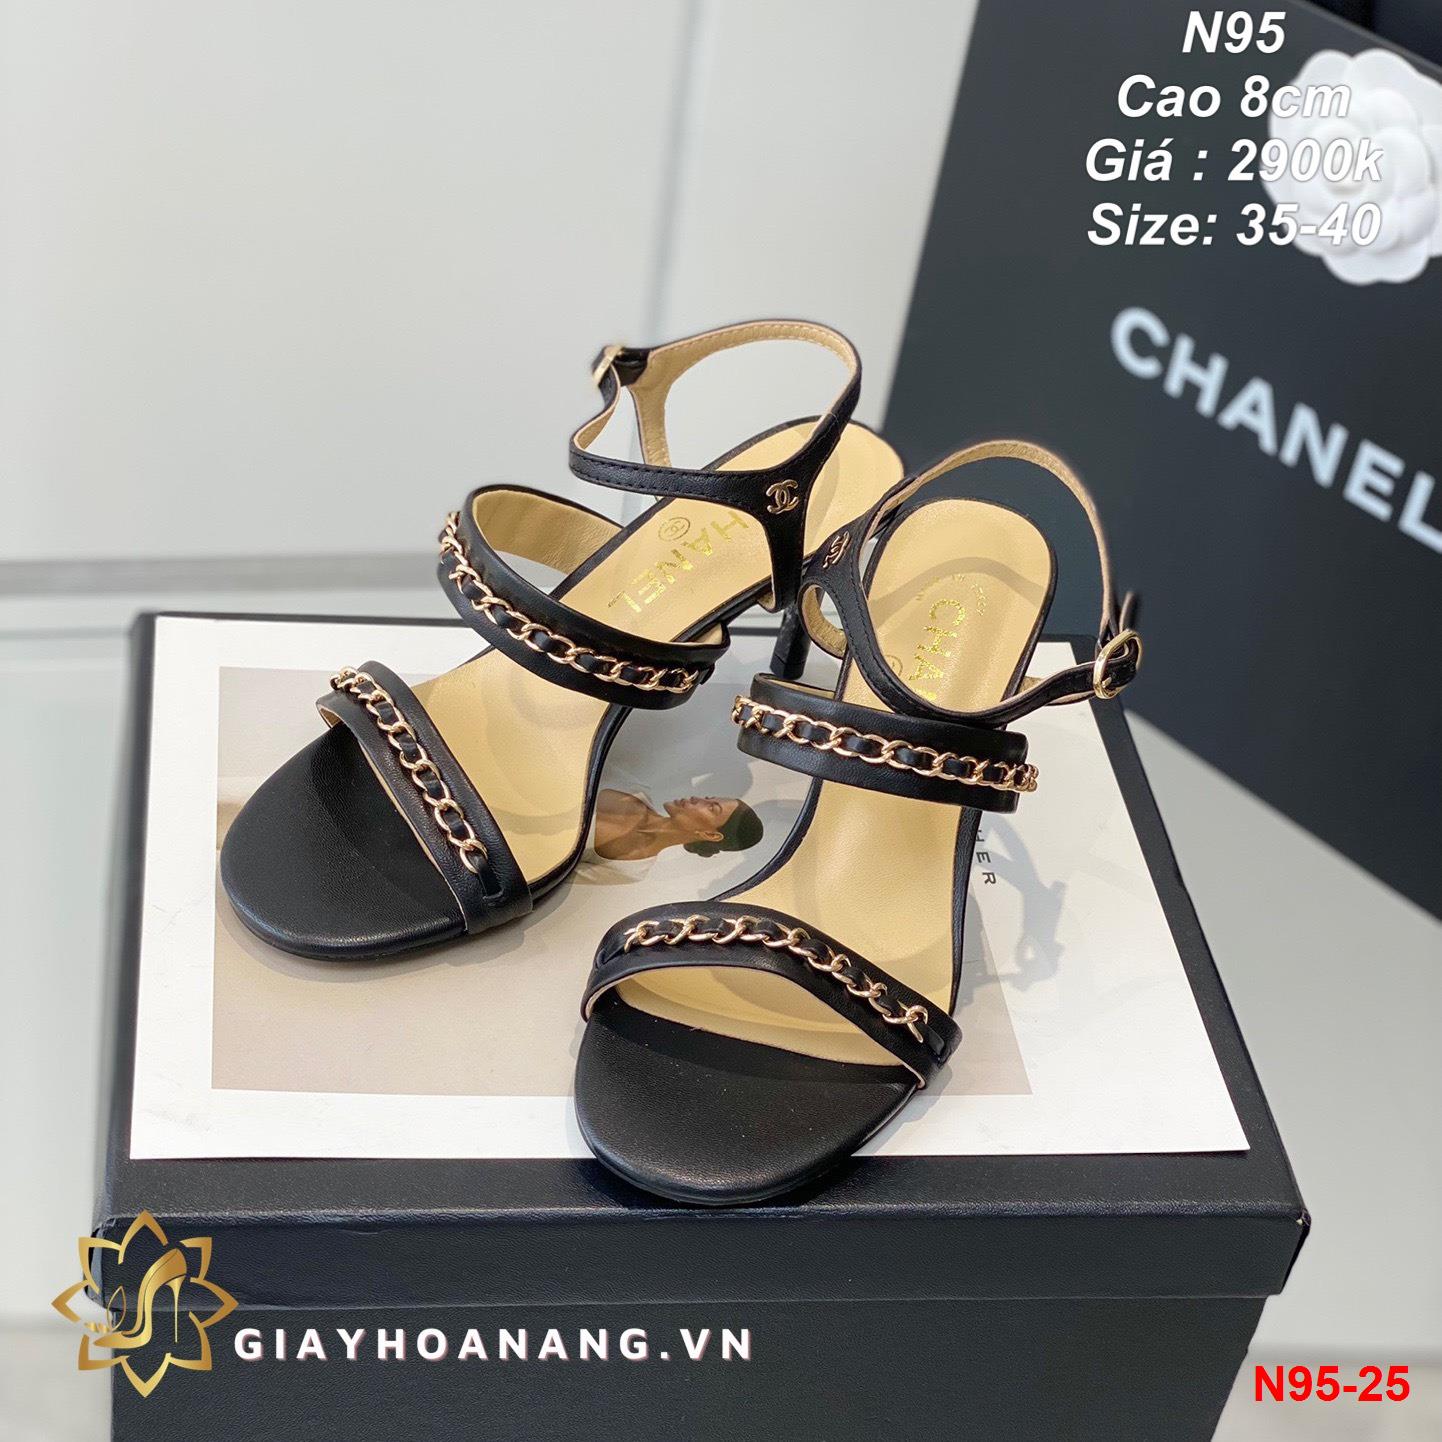 N95-25 Chanel sandal cao 8cm siêu cấp